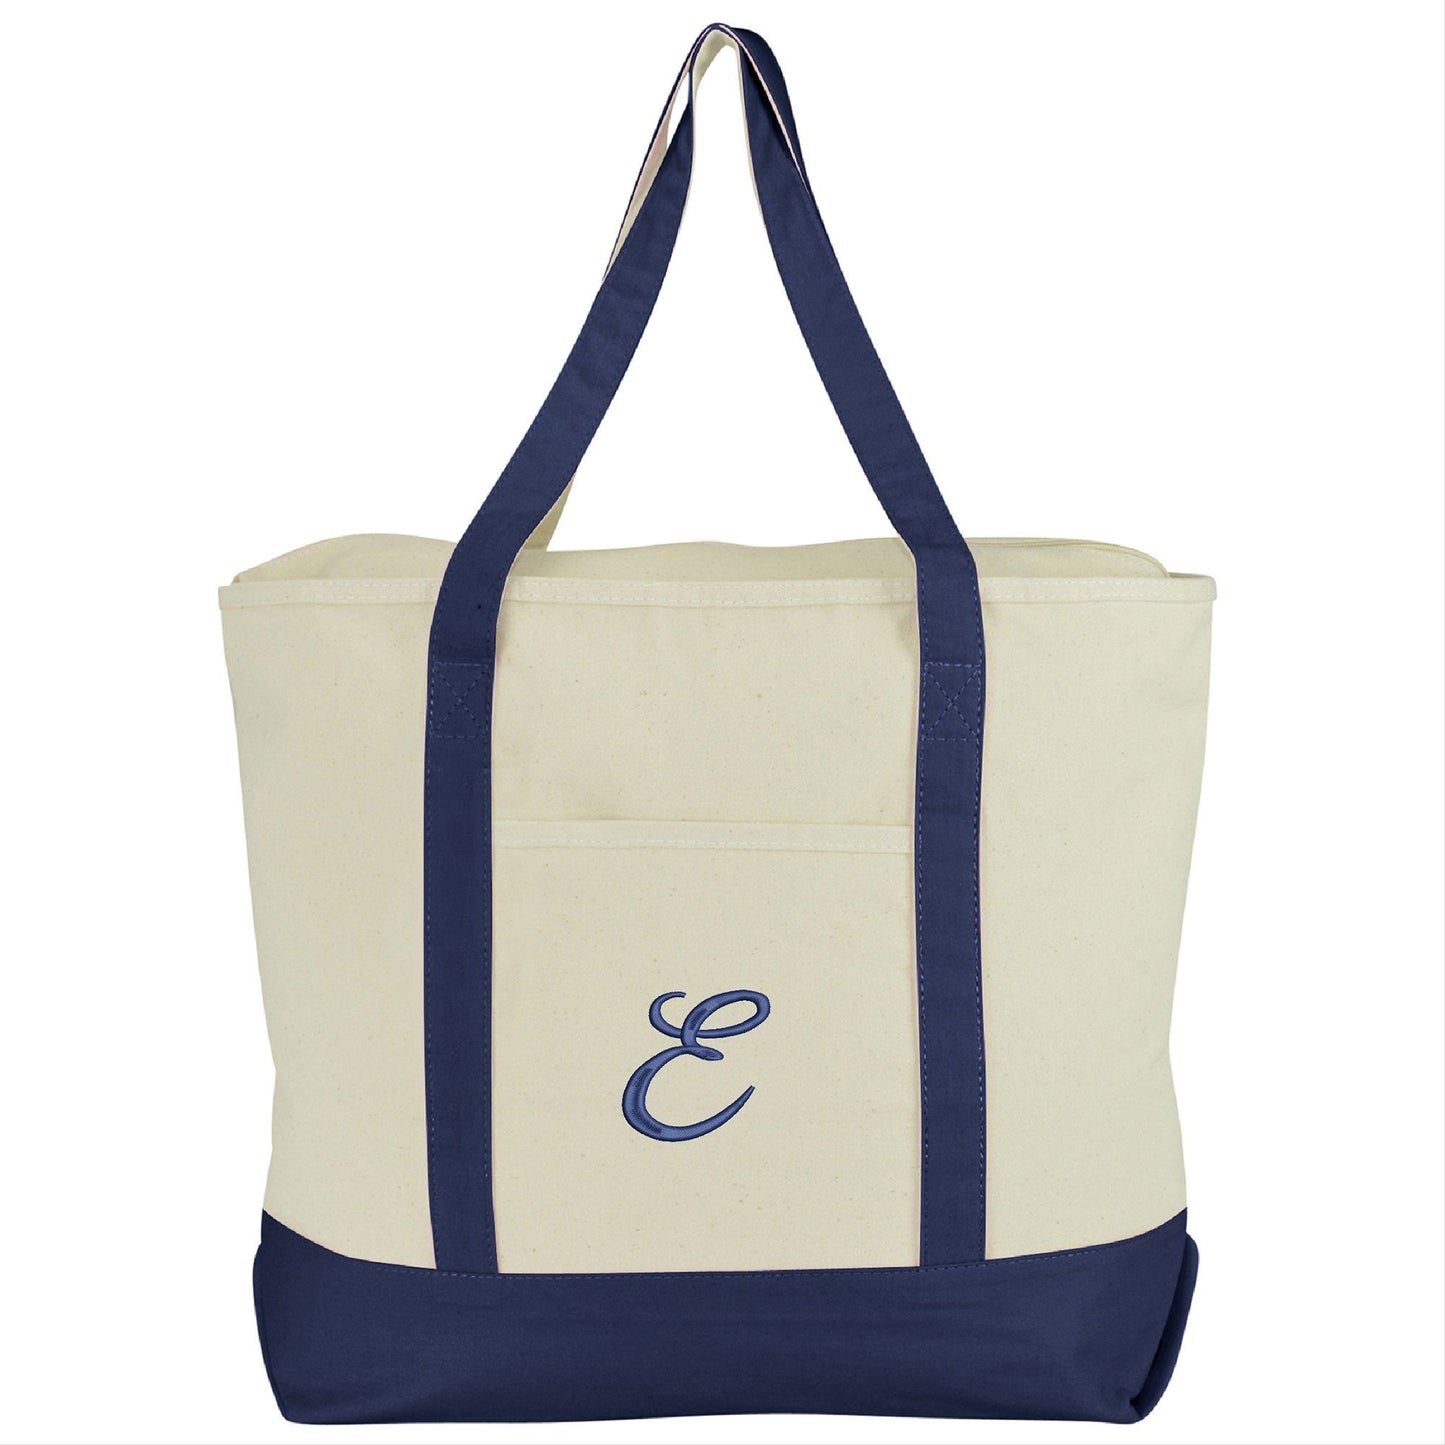 DALIX Personalized Tote Bag Monogram Navy Blue A-Z Bags DALIX E Navy Blue 